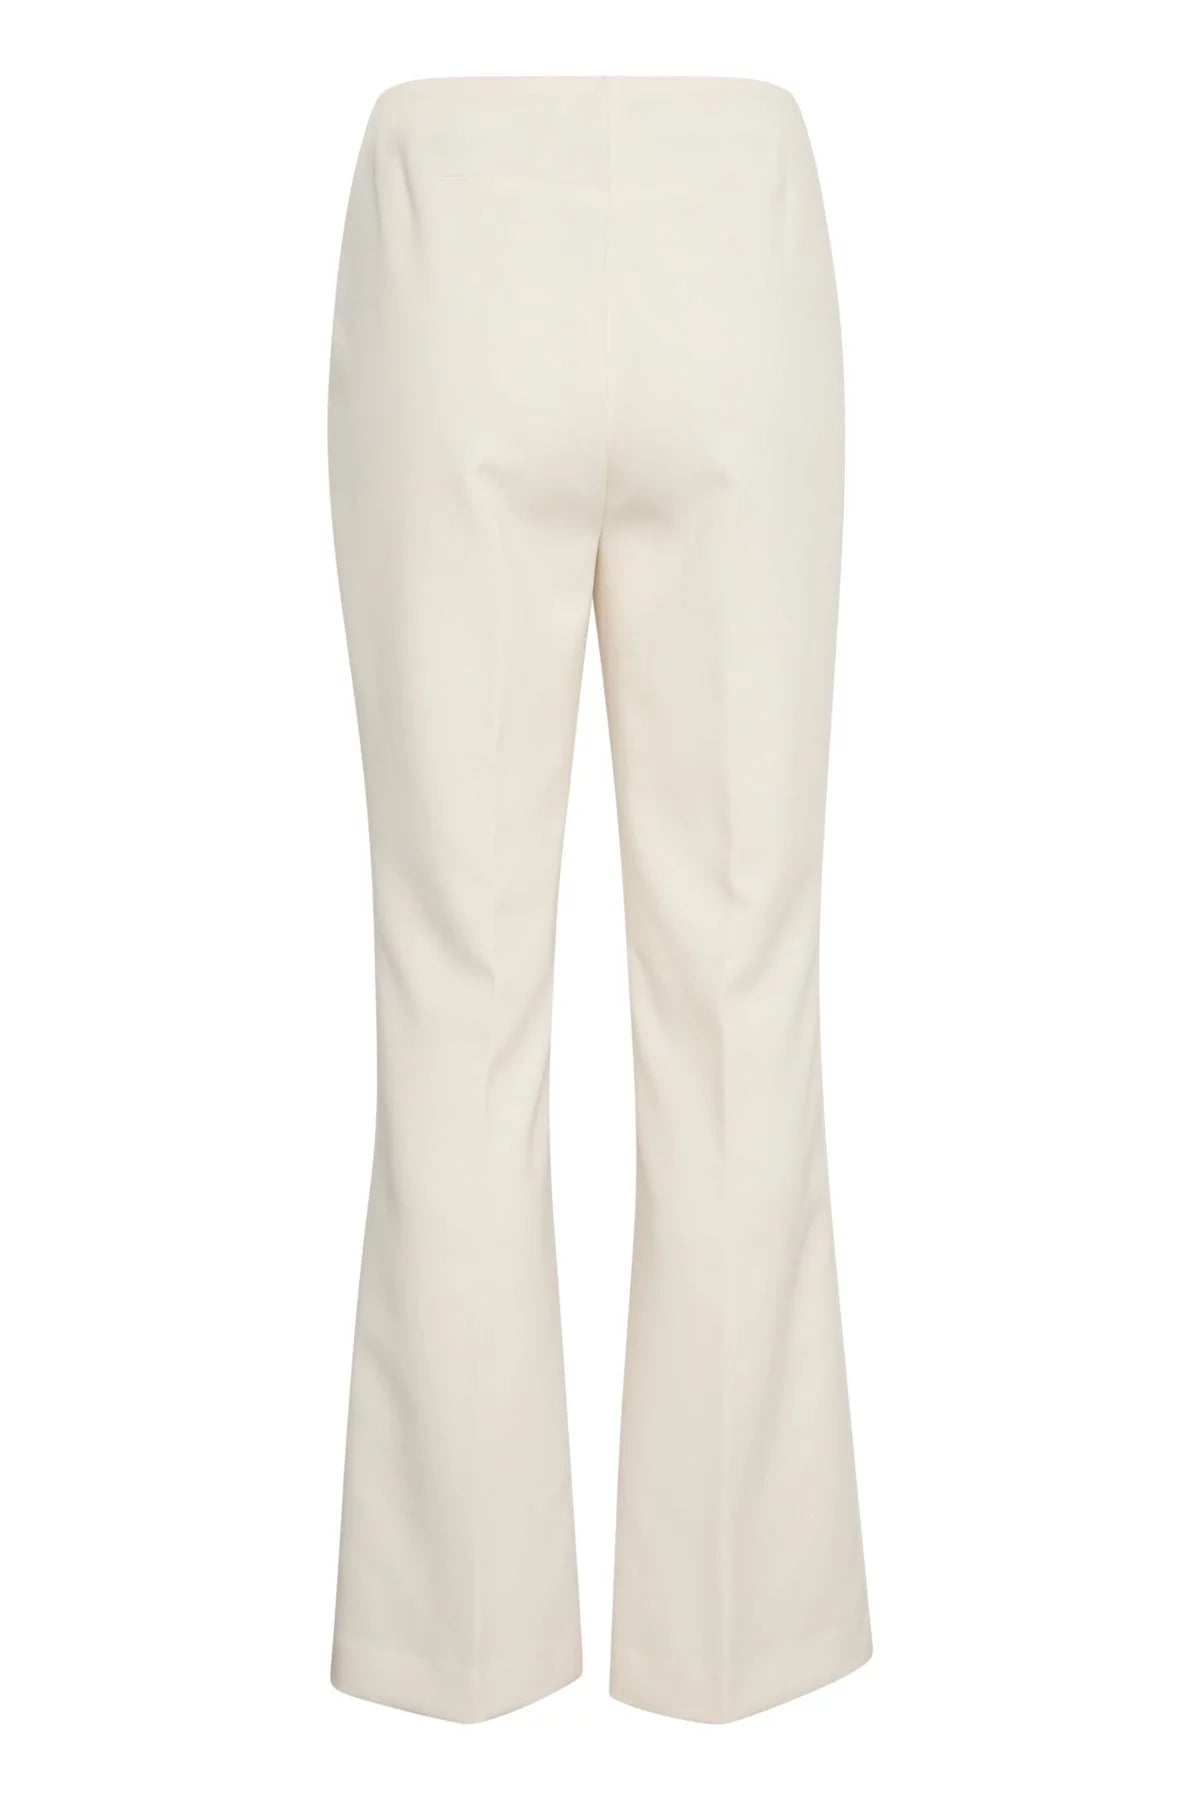 Soaked in luxury - Corinne pants, whisper white by Soaked in luxury | stylebykul